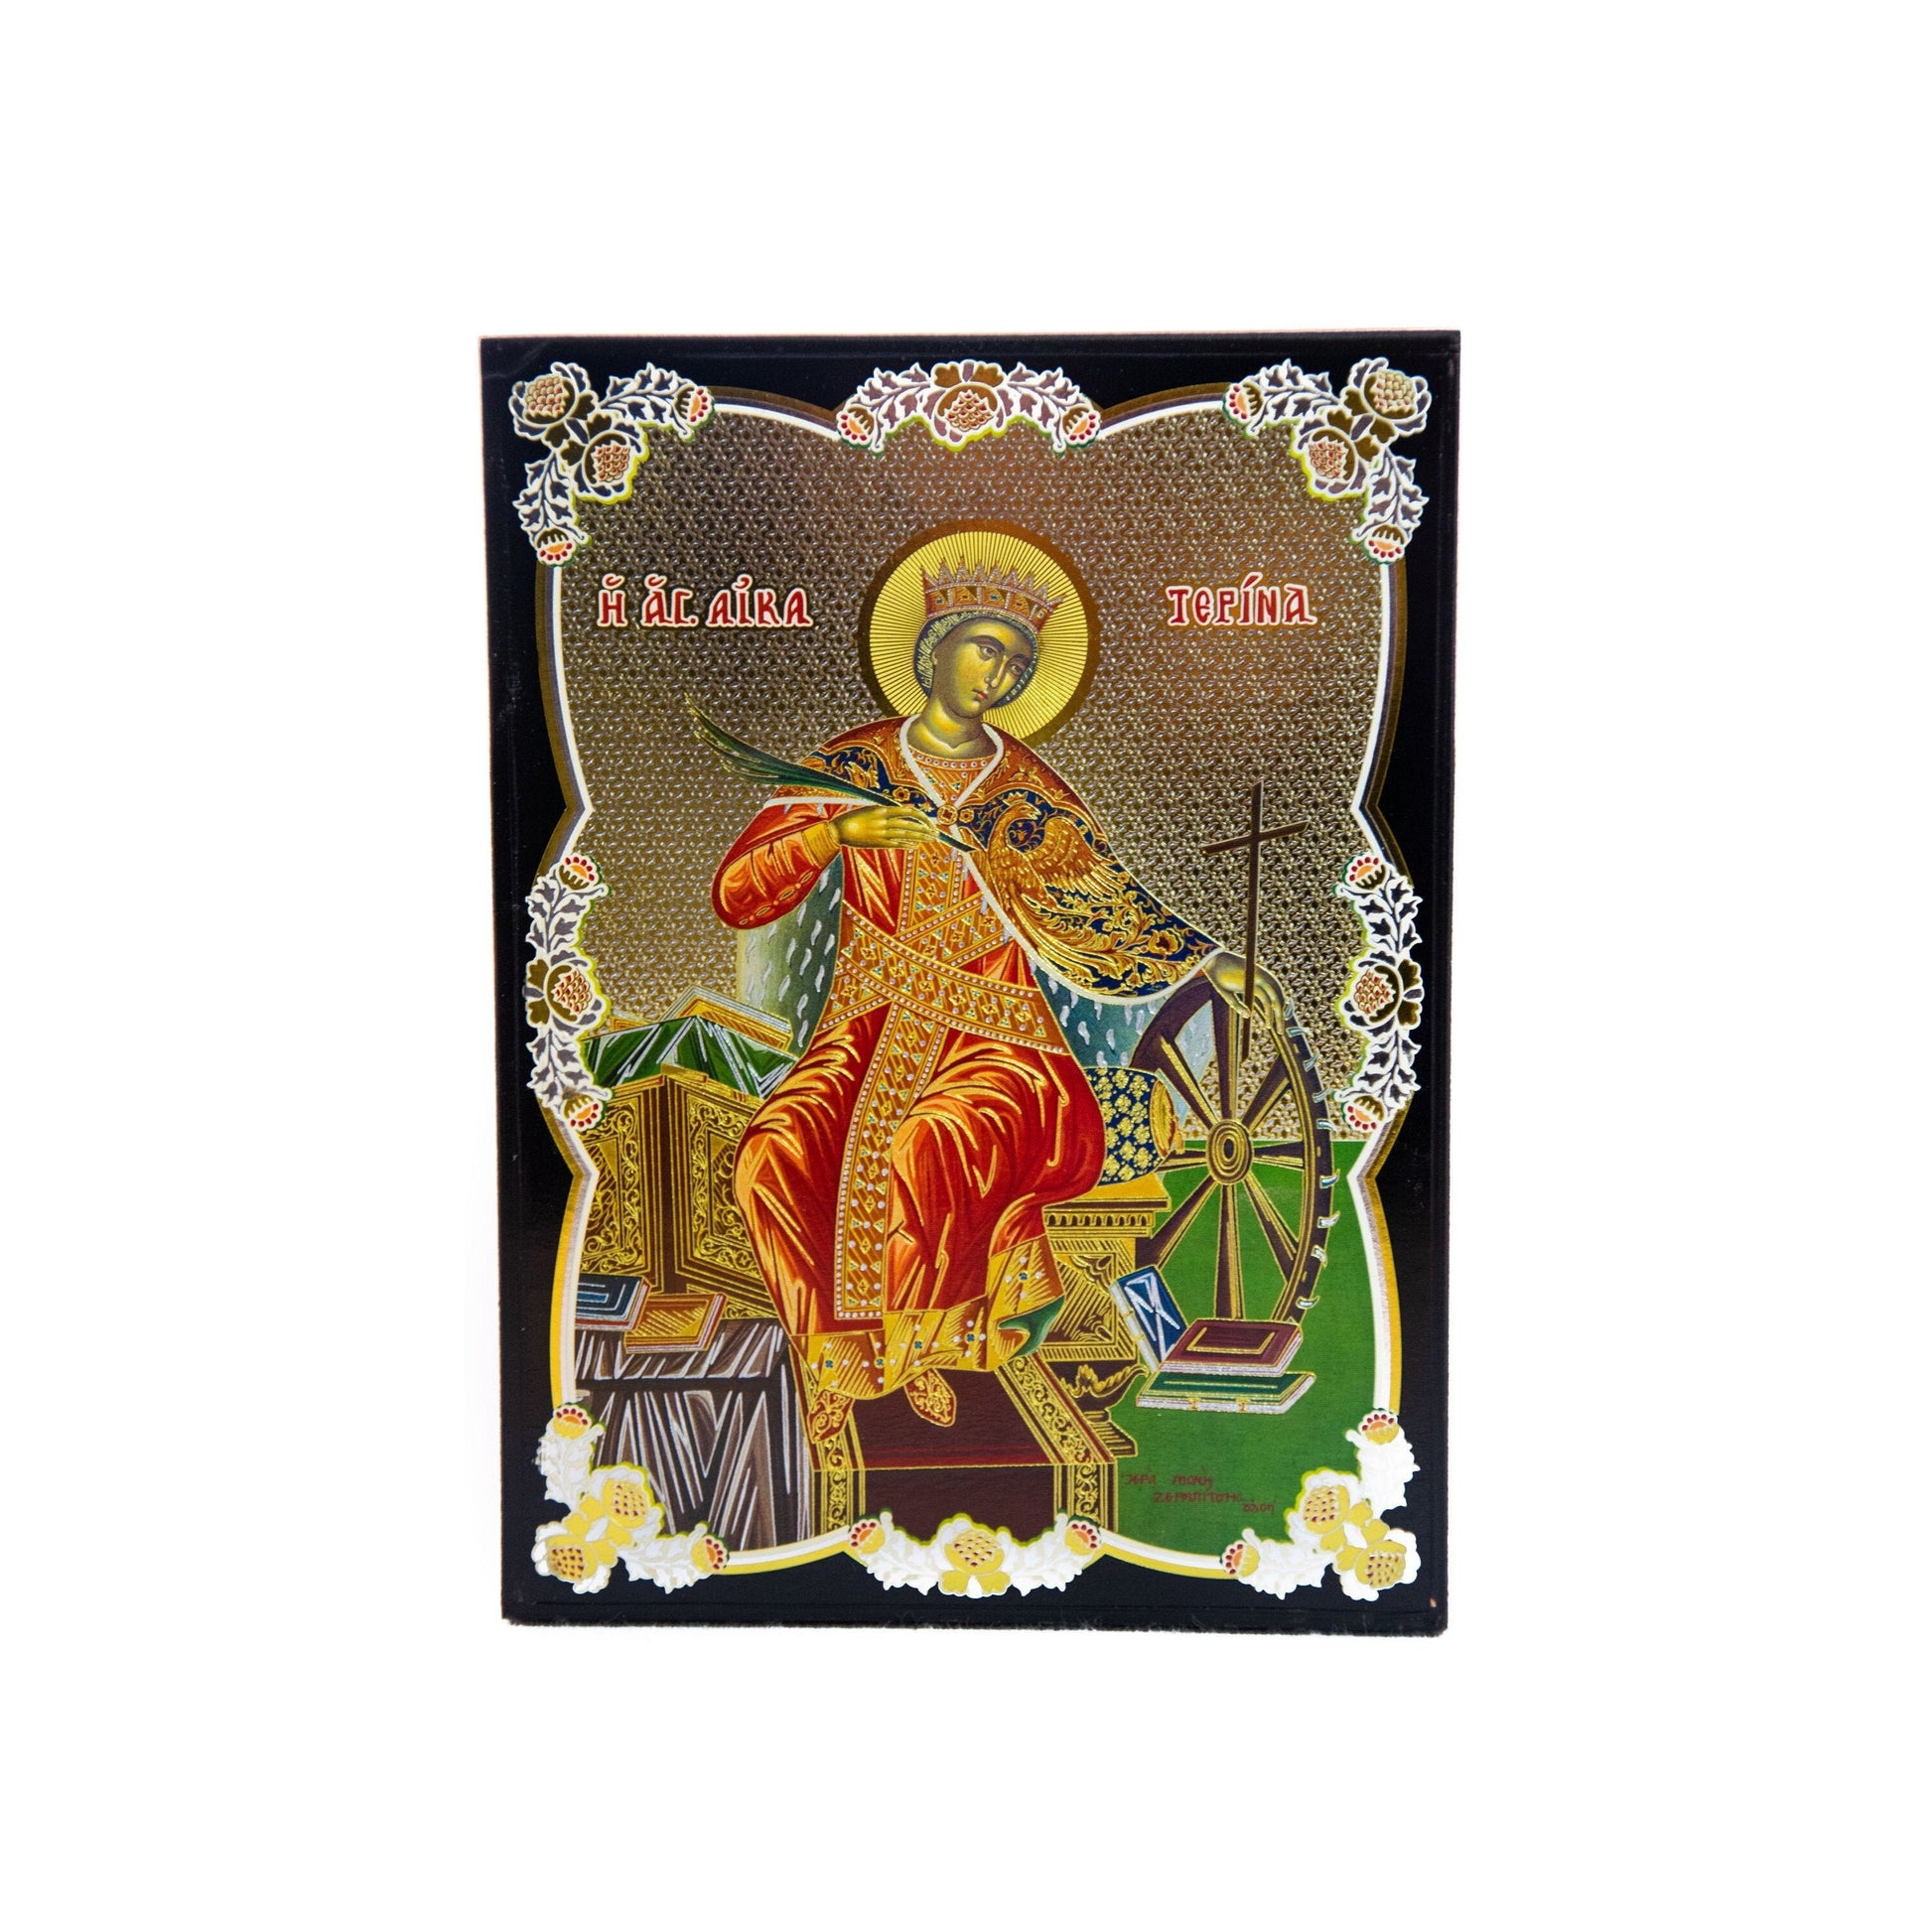 Saint Catherine icon, Handmade Greek Orthodox icon of St Katherine of Sinai, Byzantine art wall hanging icon plaque, religious decor 22x16cm TheHolyArt